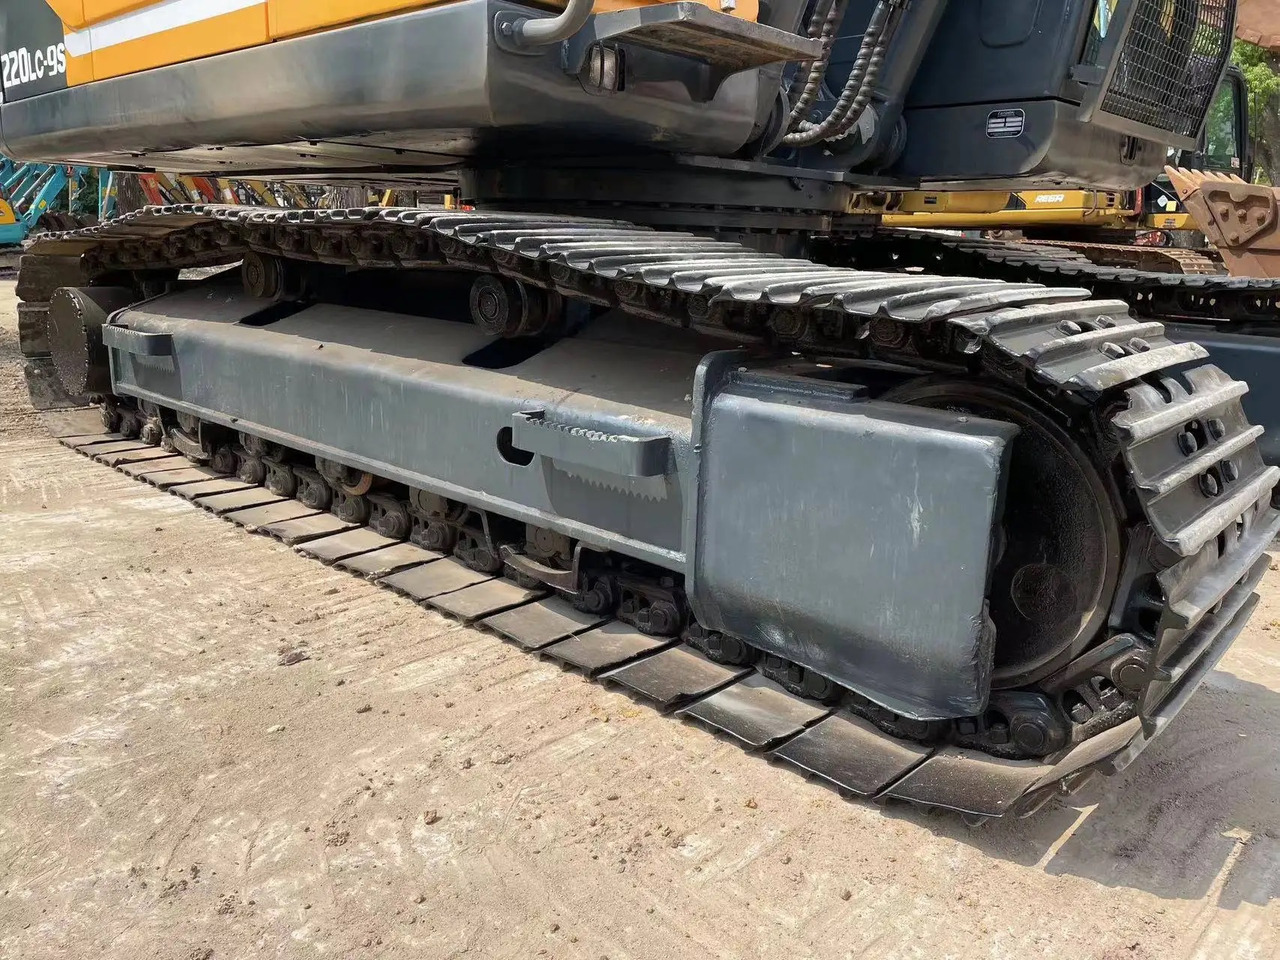 Beltegraver HYUNDAI R220 -9S track excavator 22 tons Korean hydraulic digger: bilde 7